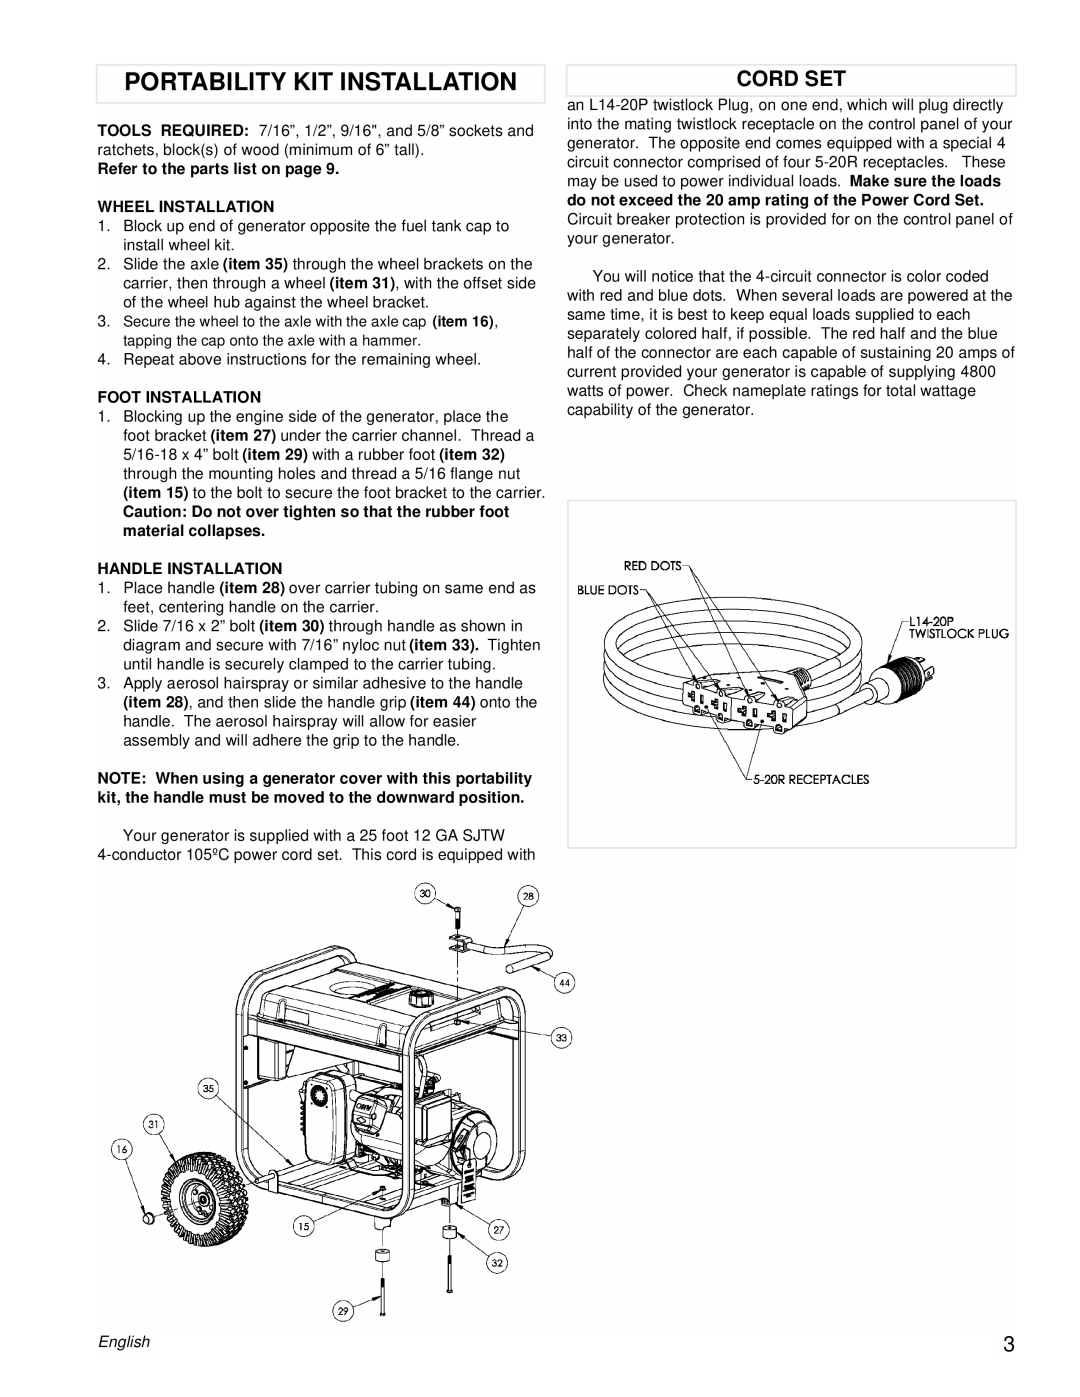 Powermate PM0545010 manual Portability Kit Installation, Cord Set, English 